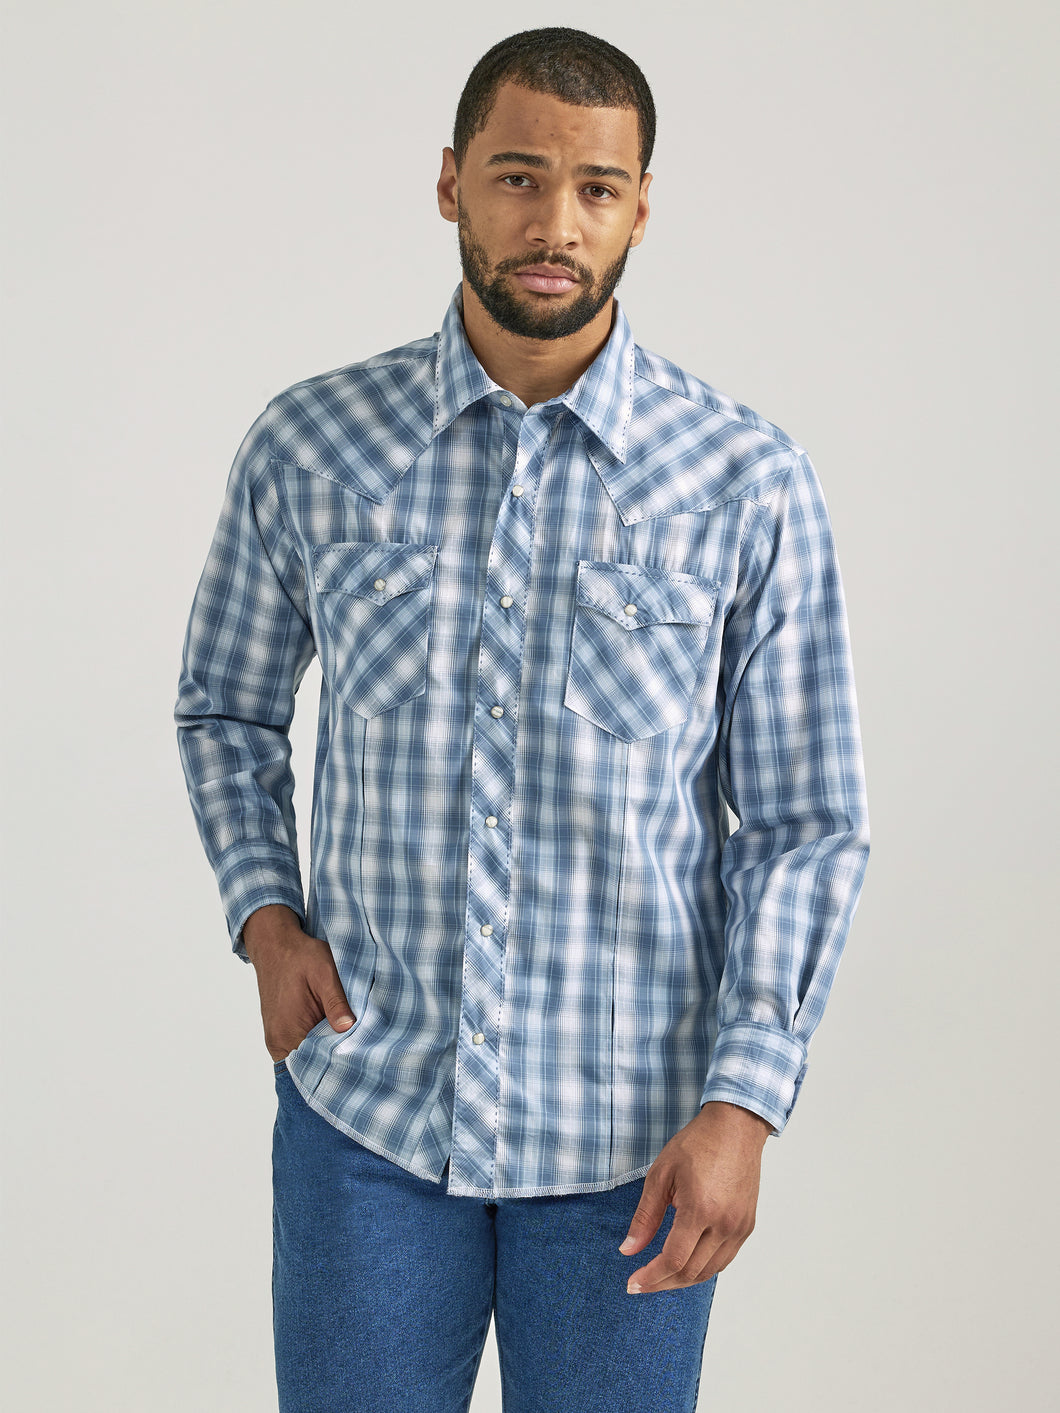 Pard's Western Shop Wrangler Blue/White Plaid Fashion Snap Western Shirt for Men